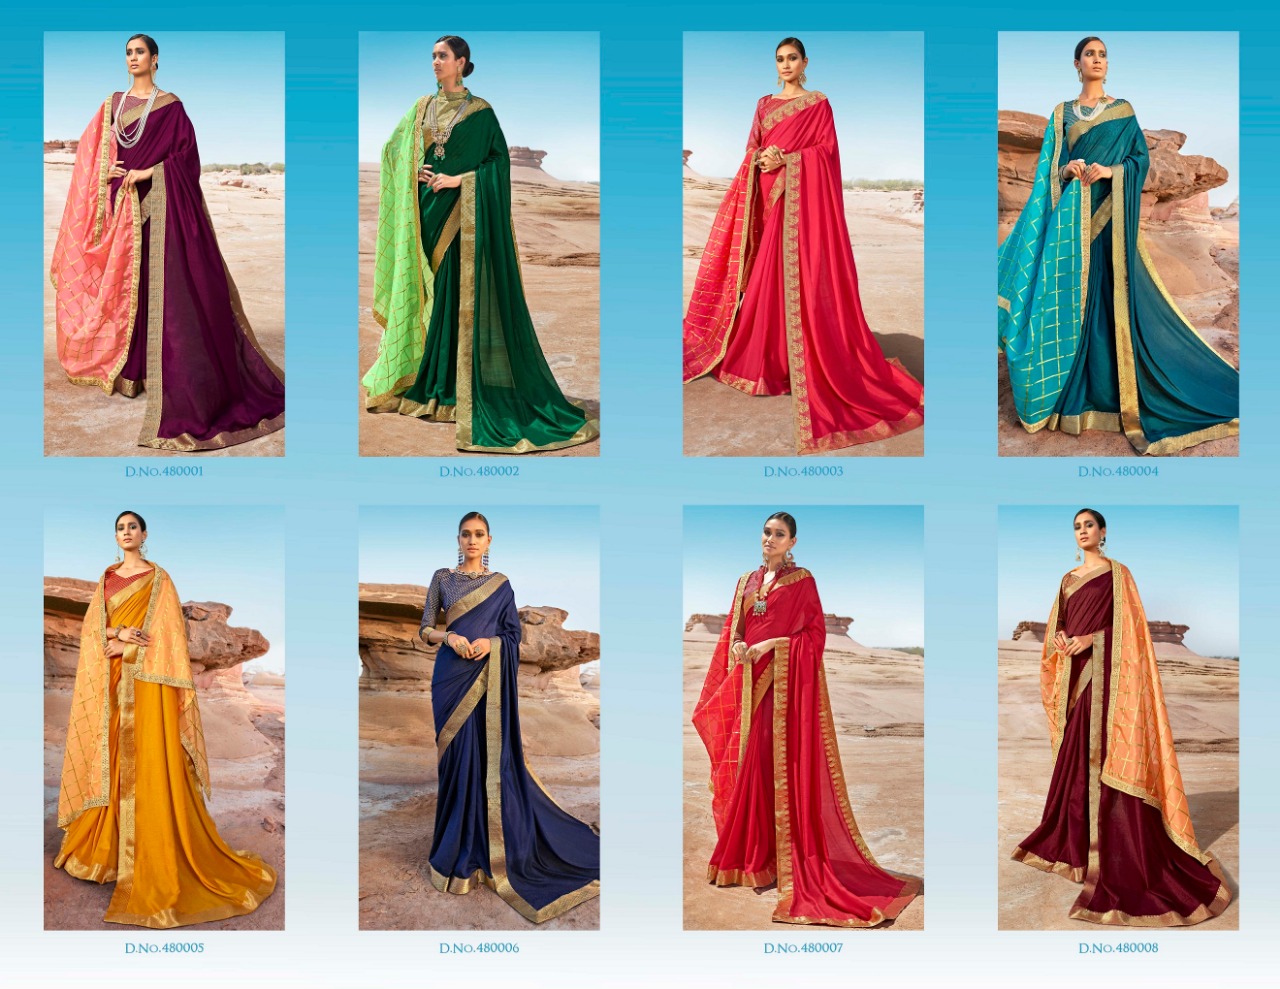 Saroj noorjahan designer fancy saree collection dealer